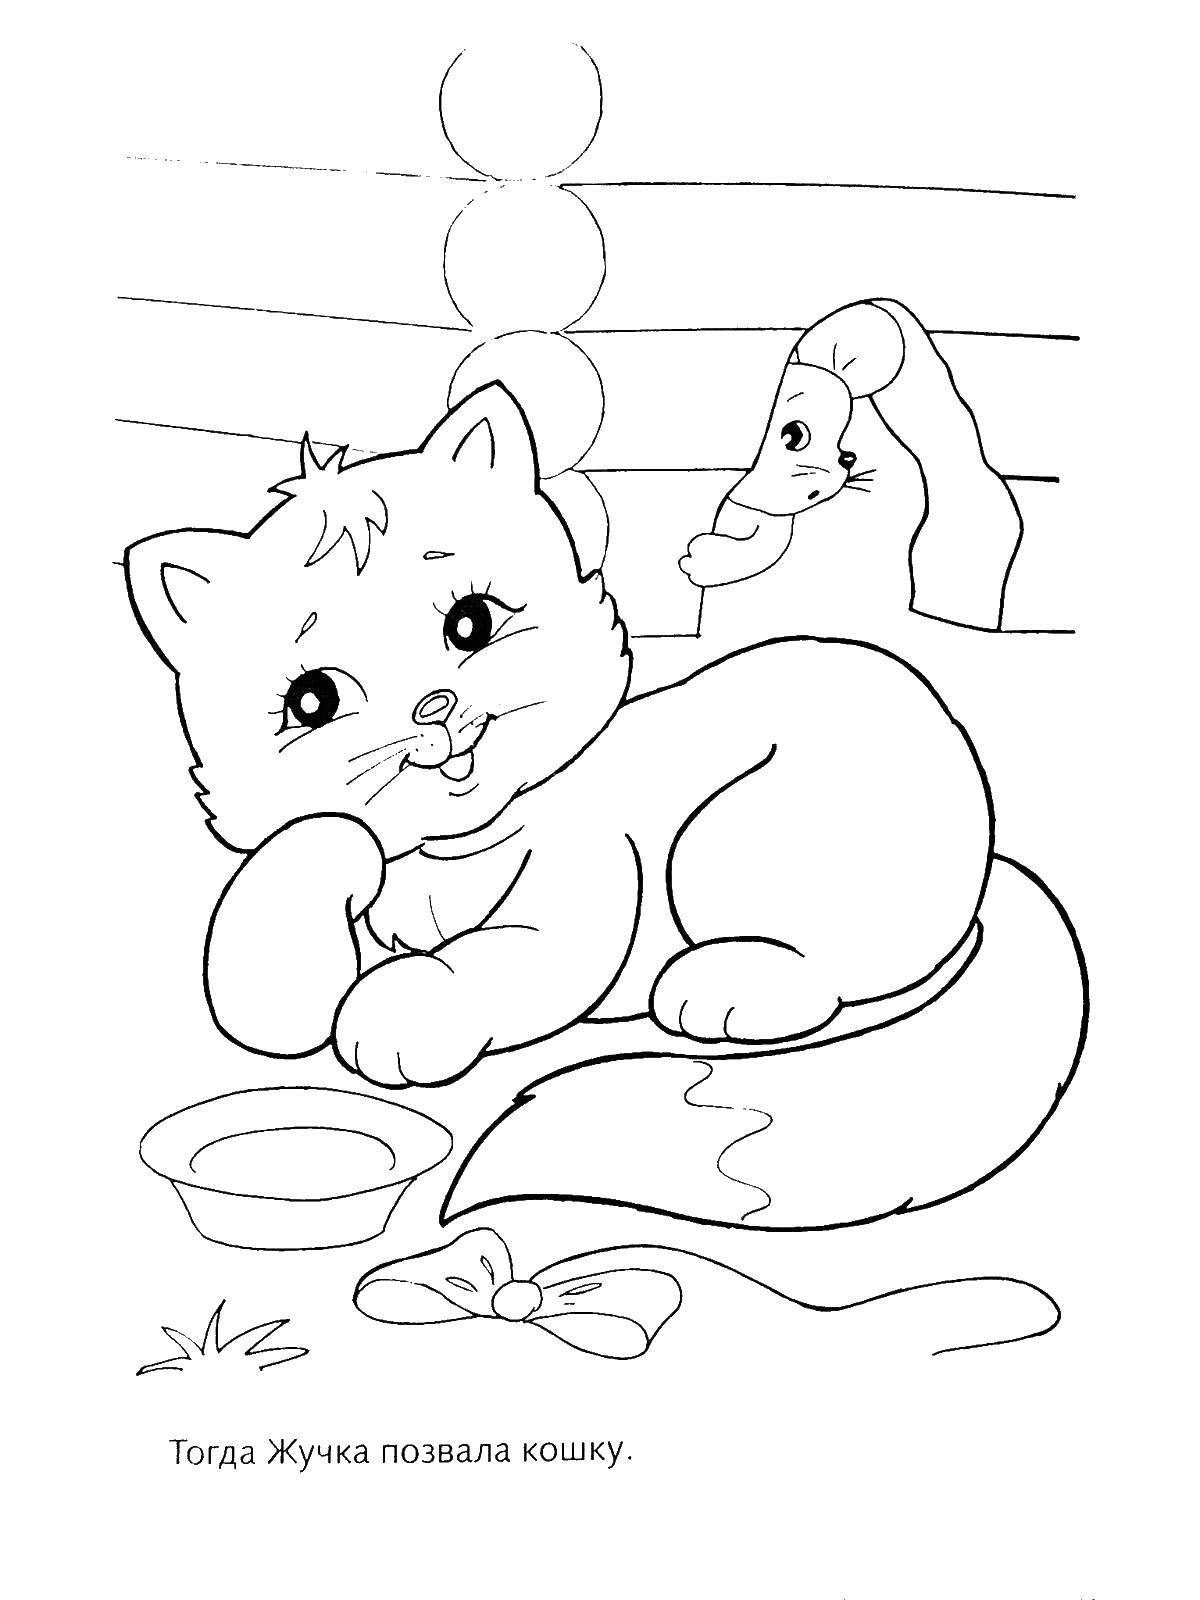 Название: Раскраска Котенок и мышка. Категория: котики. Теги: котенок, мышка, миска, норка.